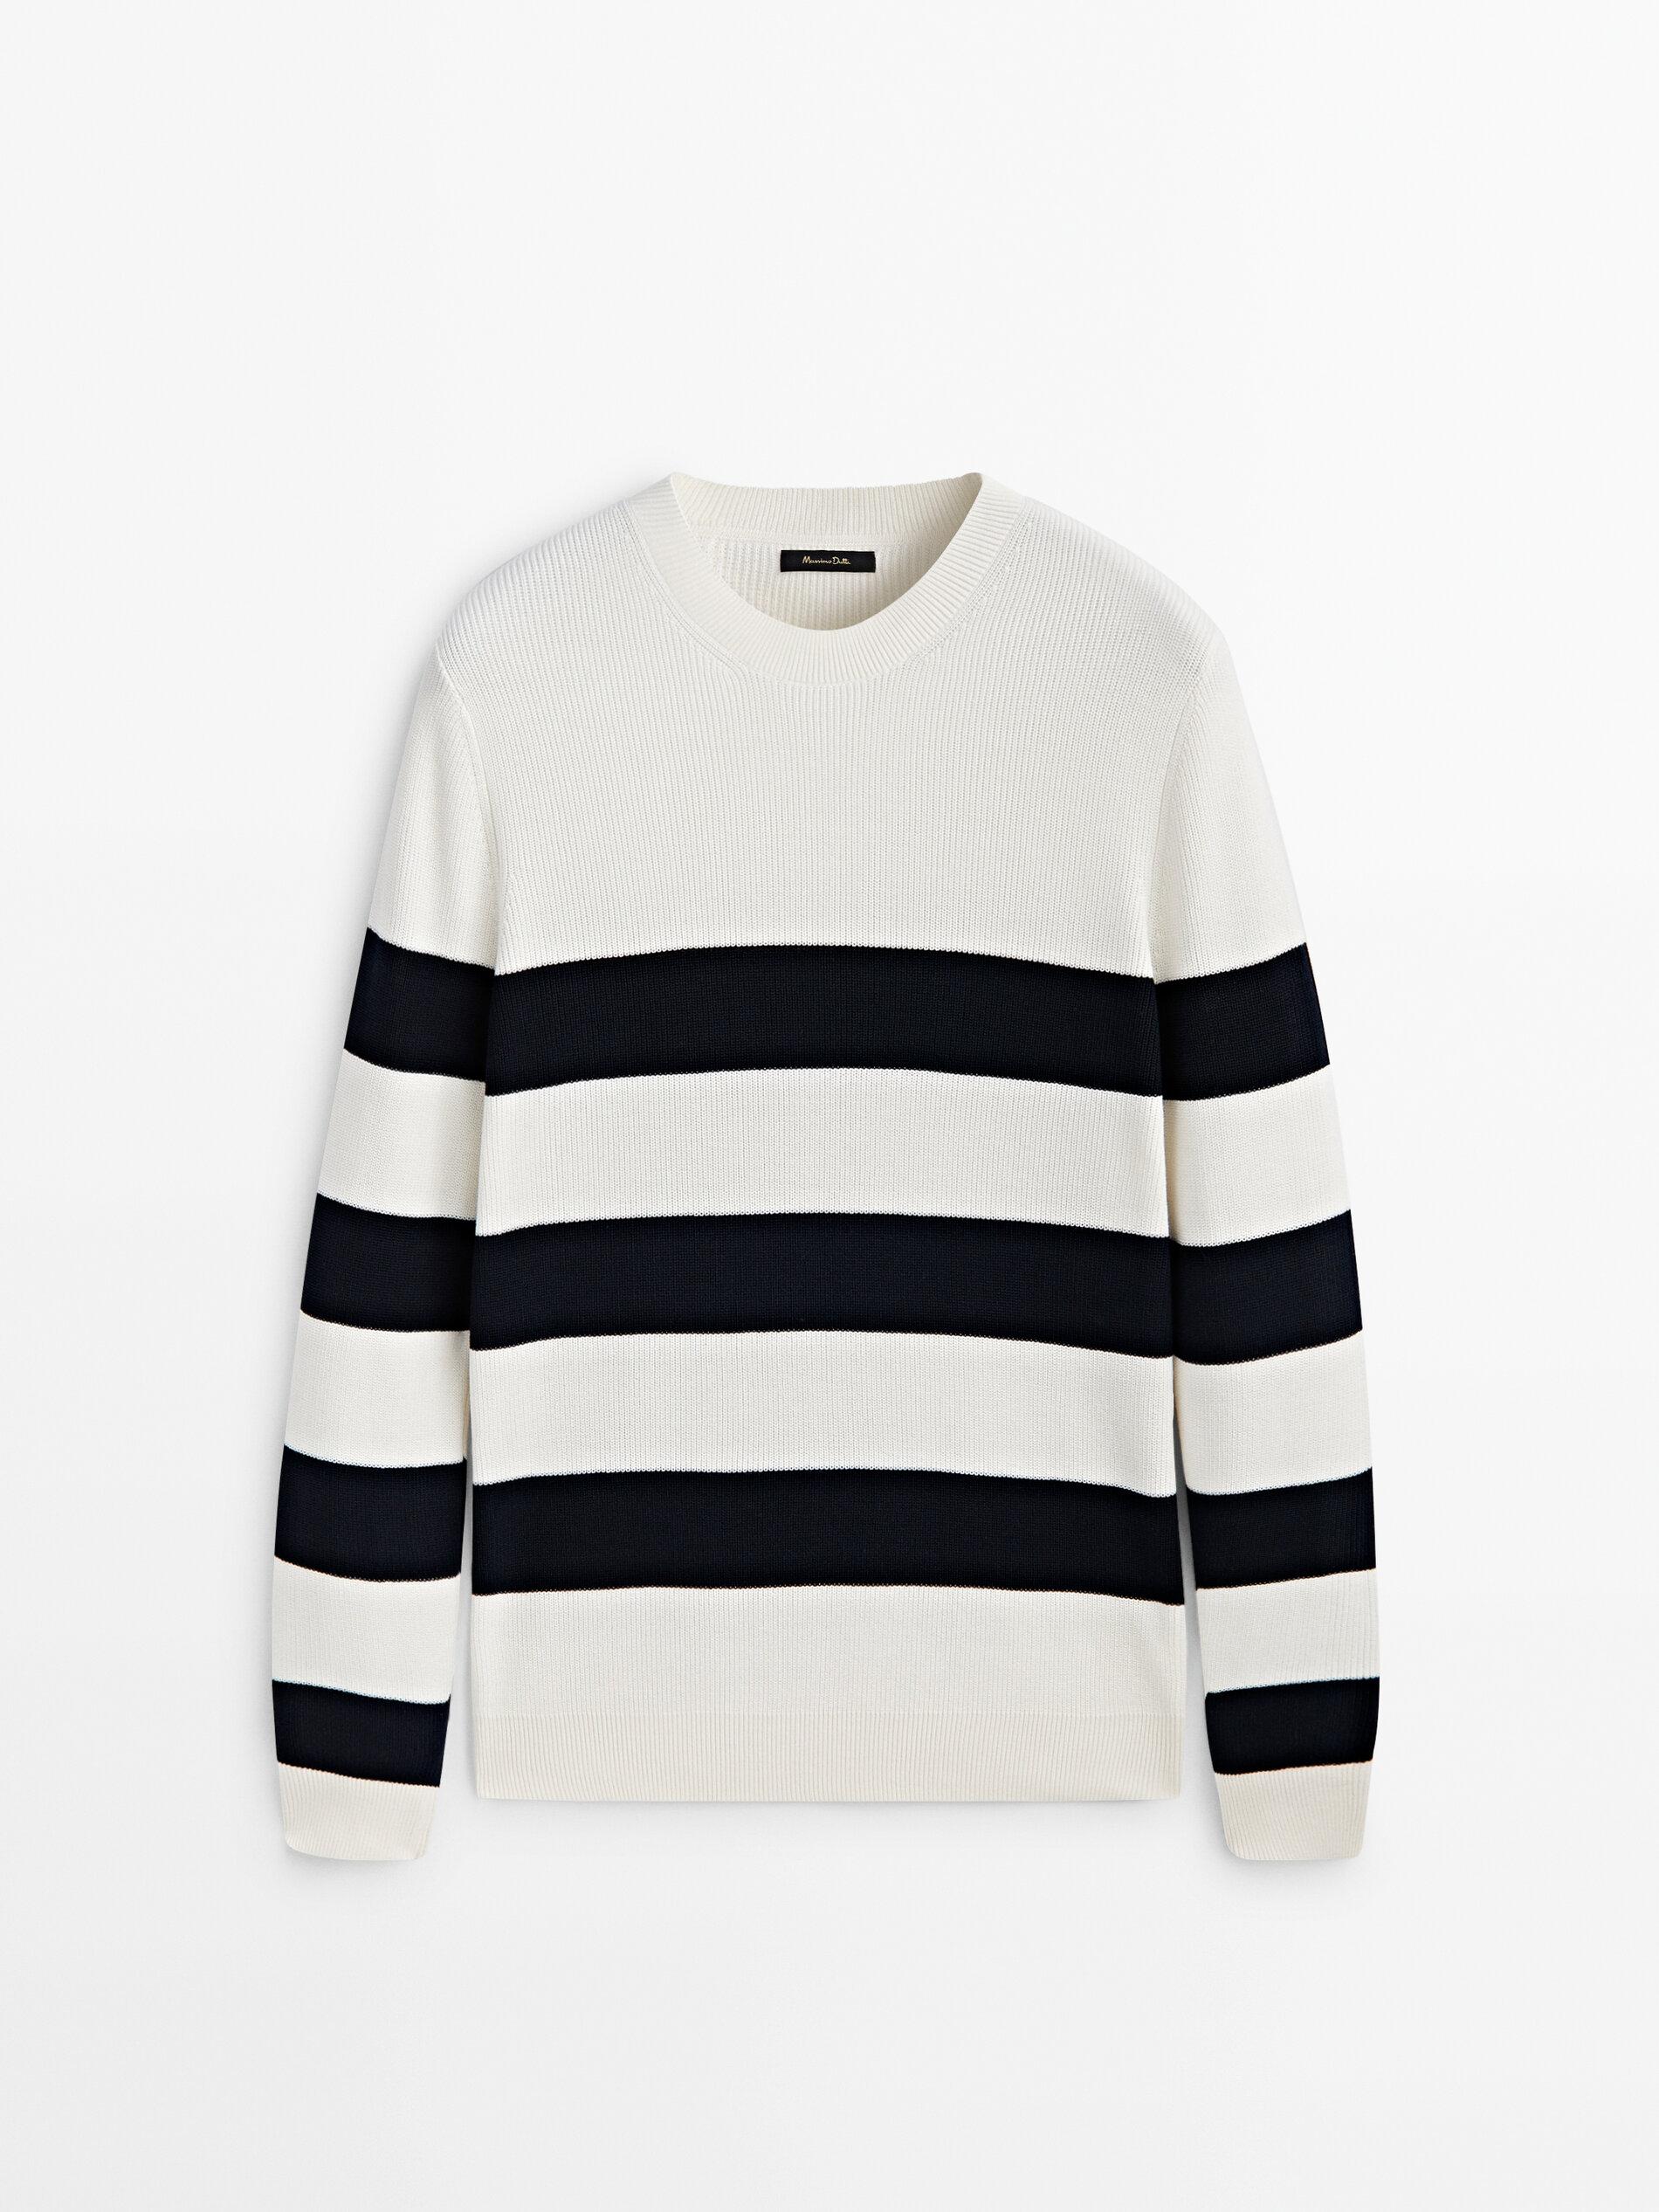 MASSIMO DUTTI Striped Knit Crew Neck Sweater in White for Men | Lyst